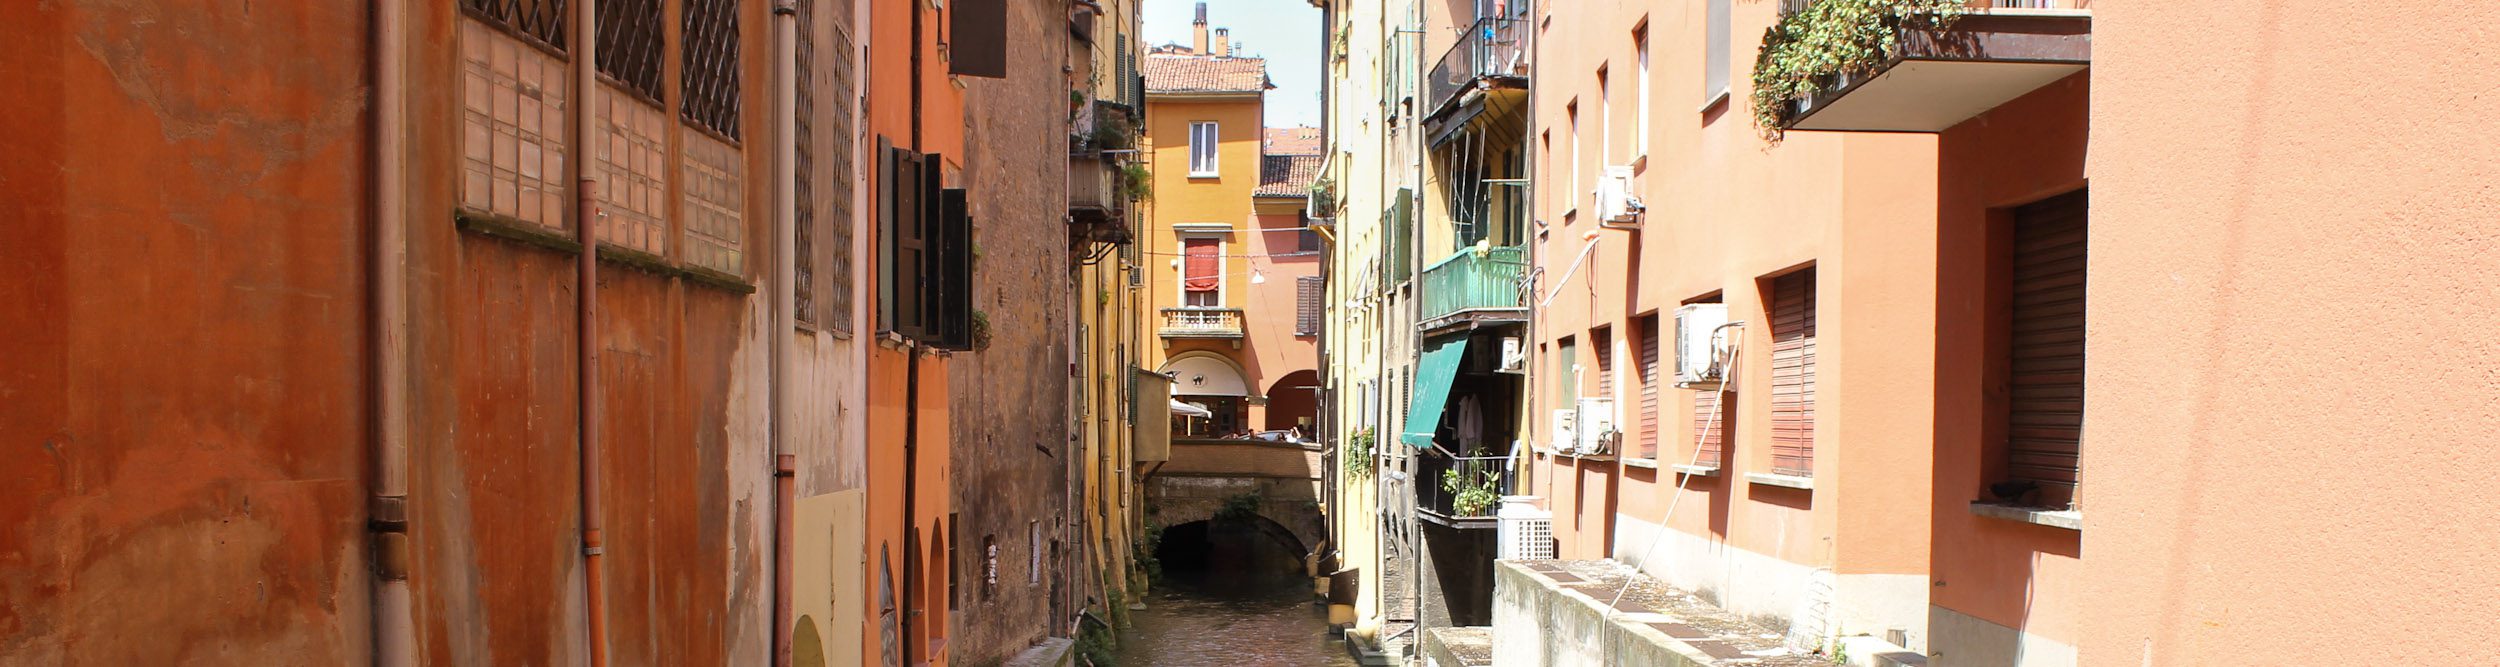 Bologna’s Hidden Canals - Italian Notes